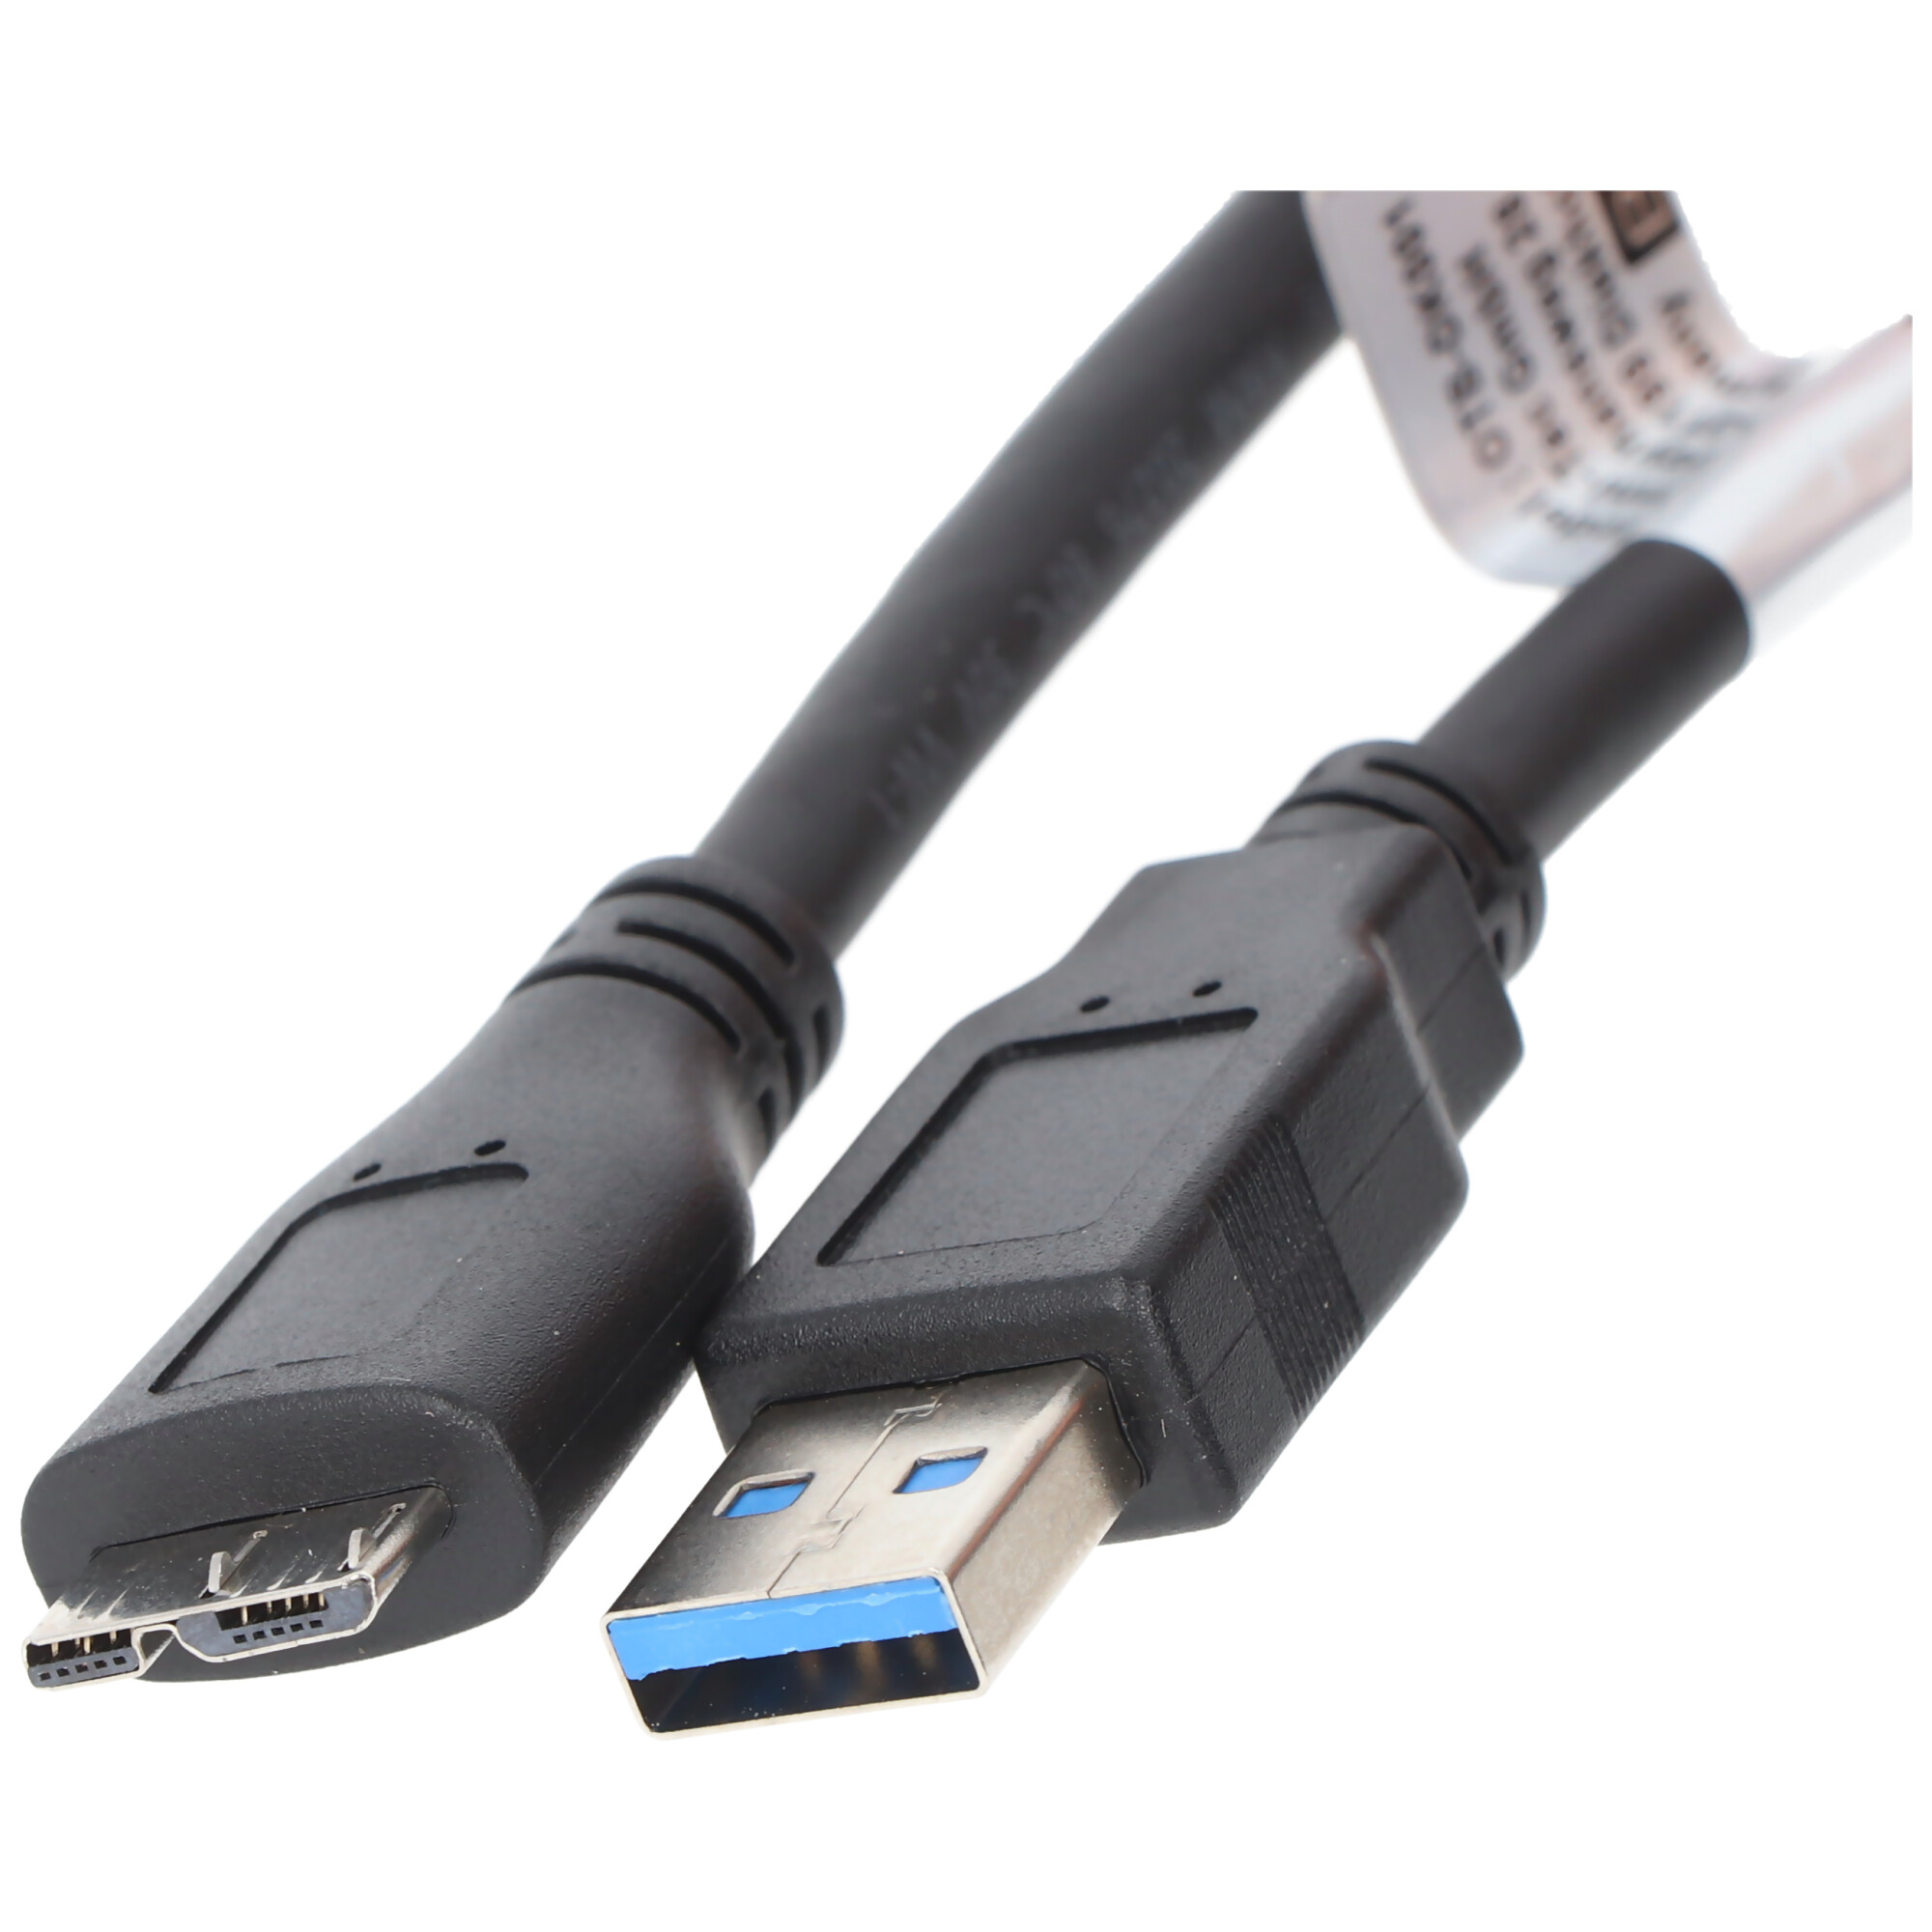 Datenkabel kompatibel zu Micro-USB 3.0, 1 Meter, Farbe schwarz